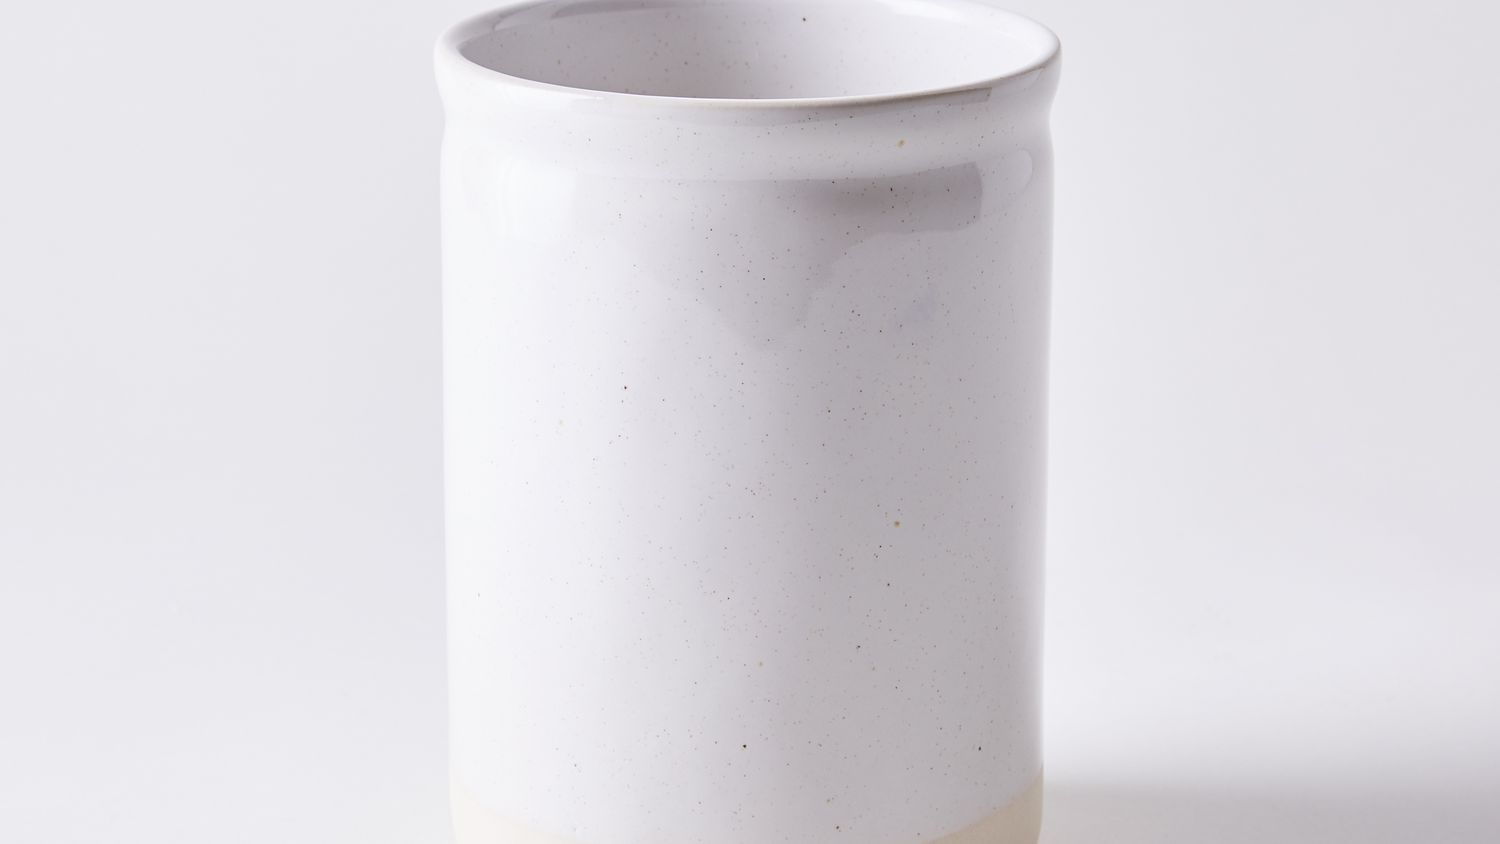 Coastal White Crab Kitchen Utensil Holder Milk Glaze Terracotta Embossed  Ceramic 